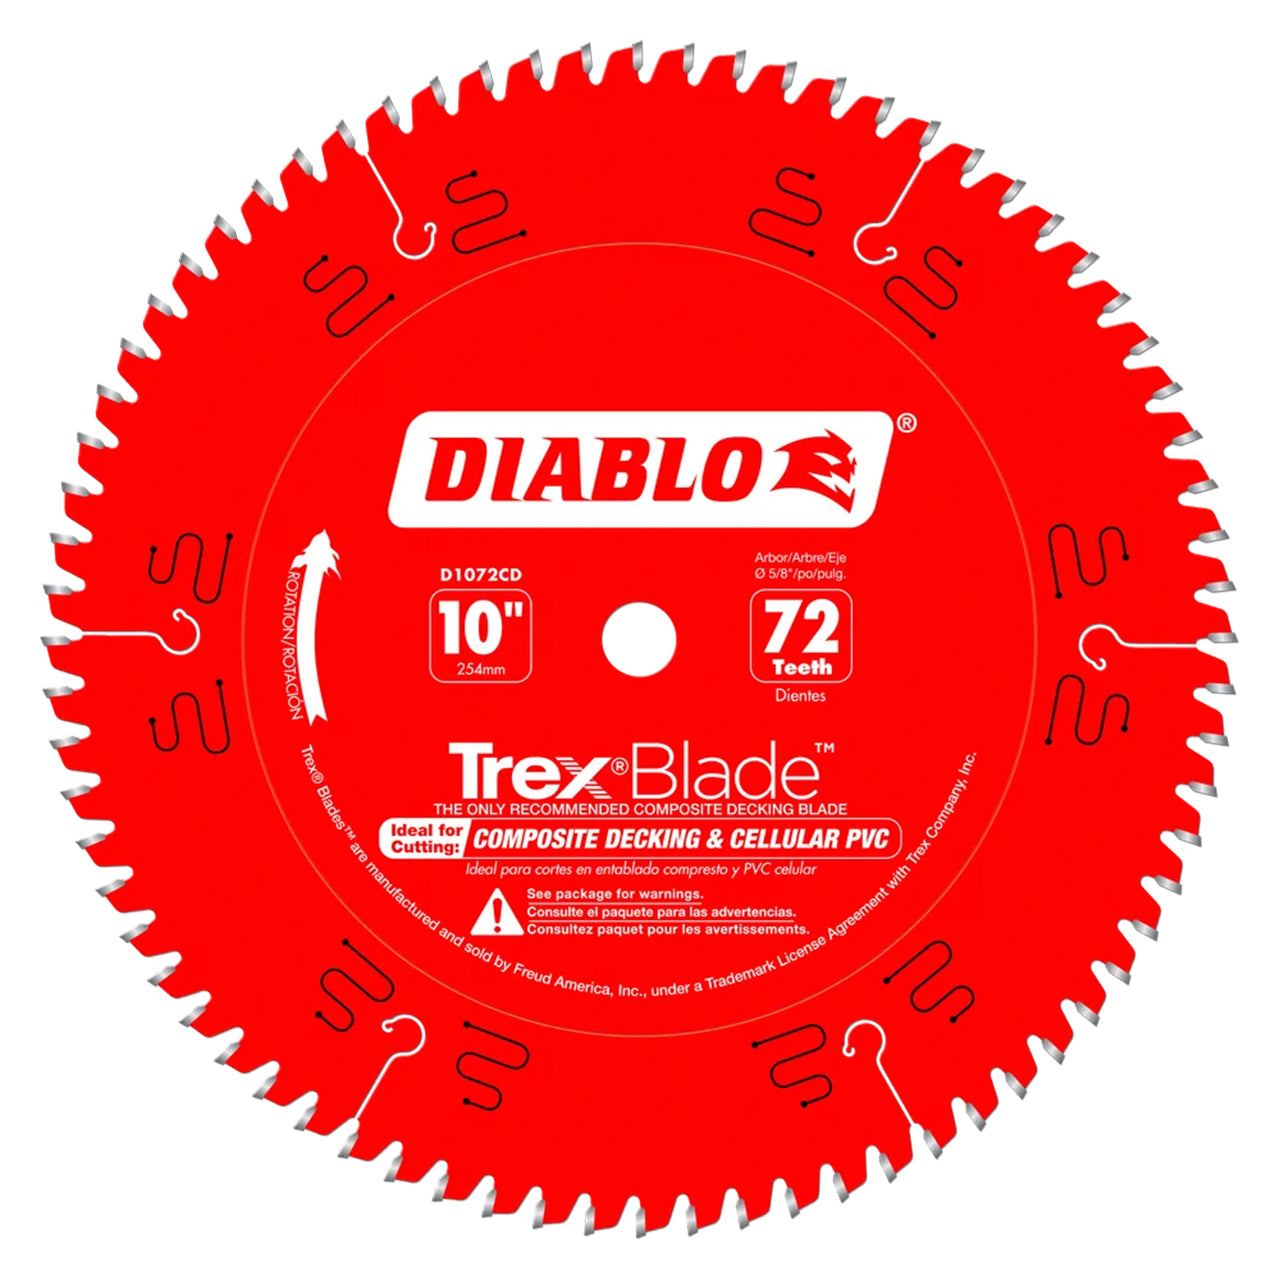 Diablo 10" trex blade